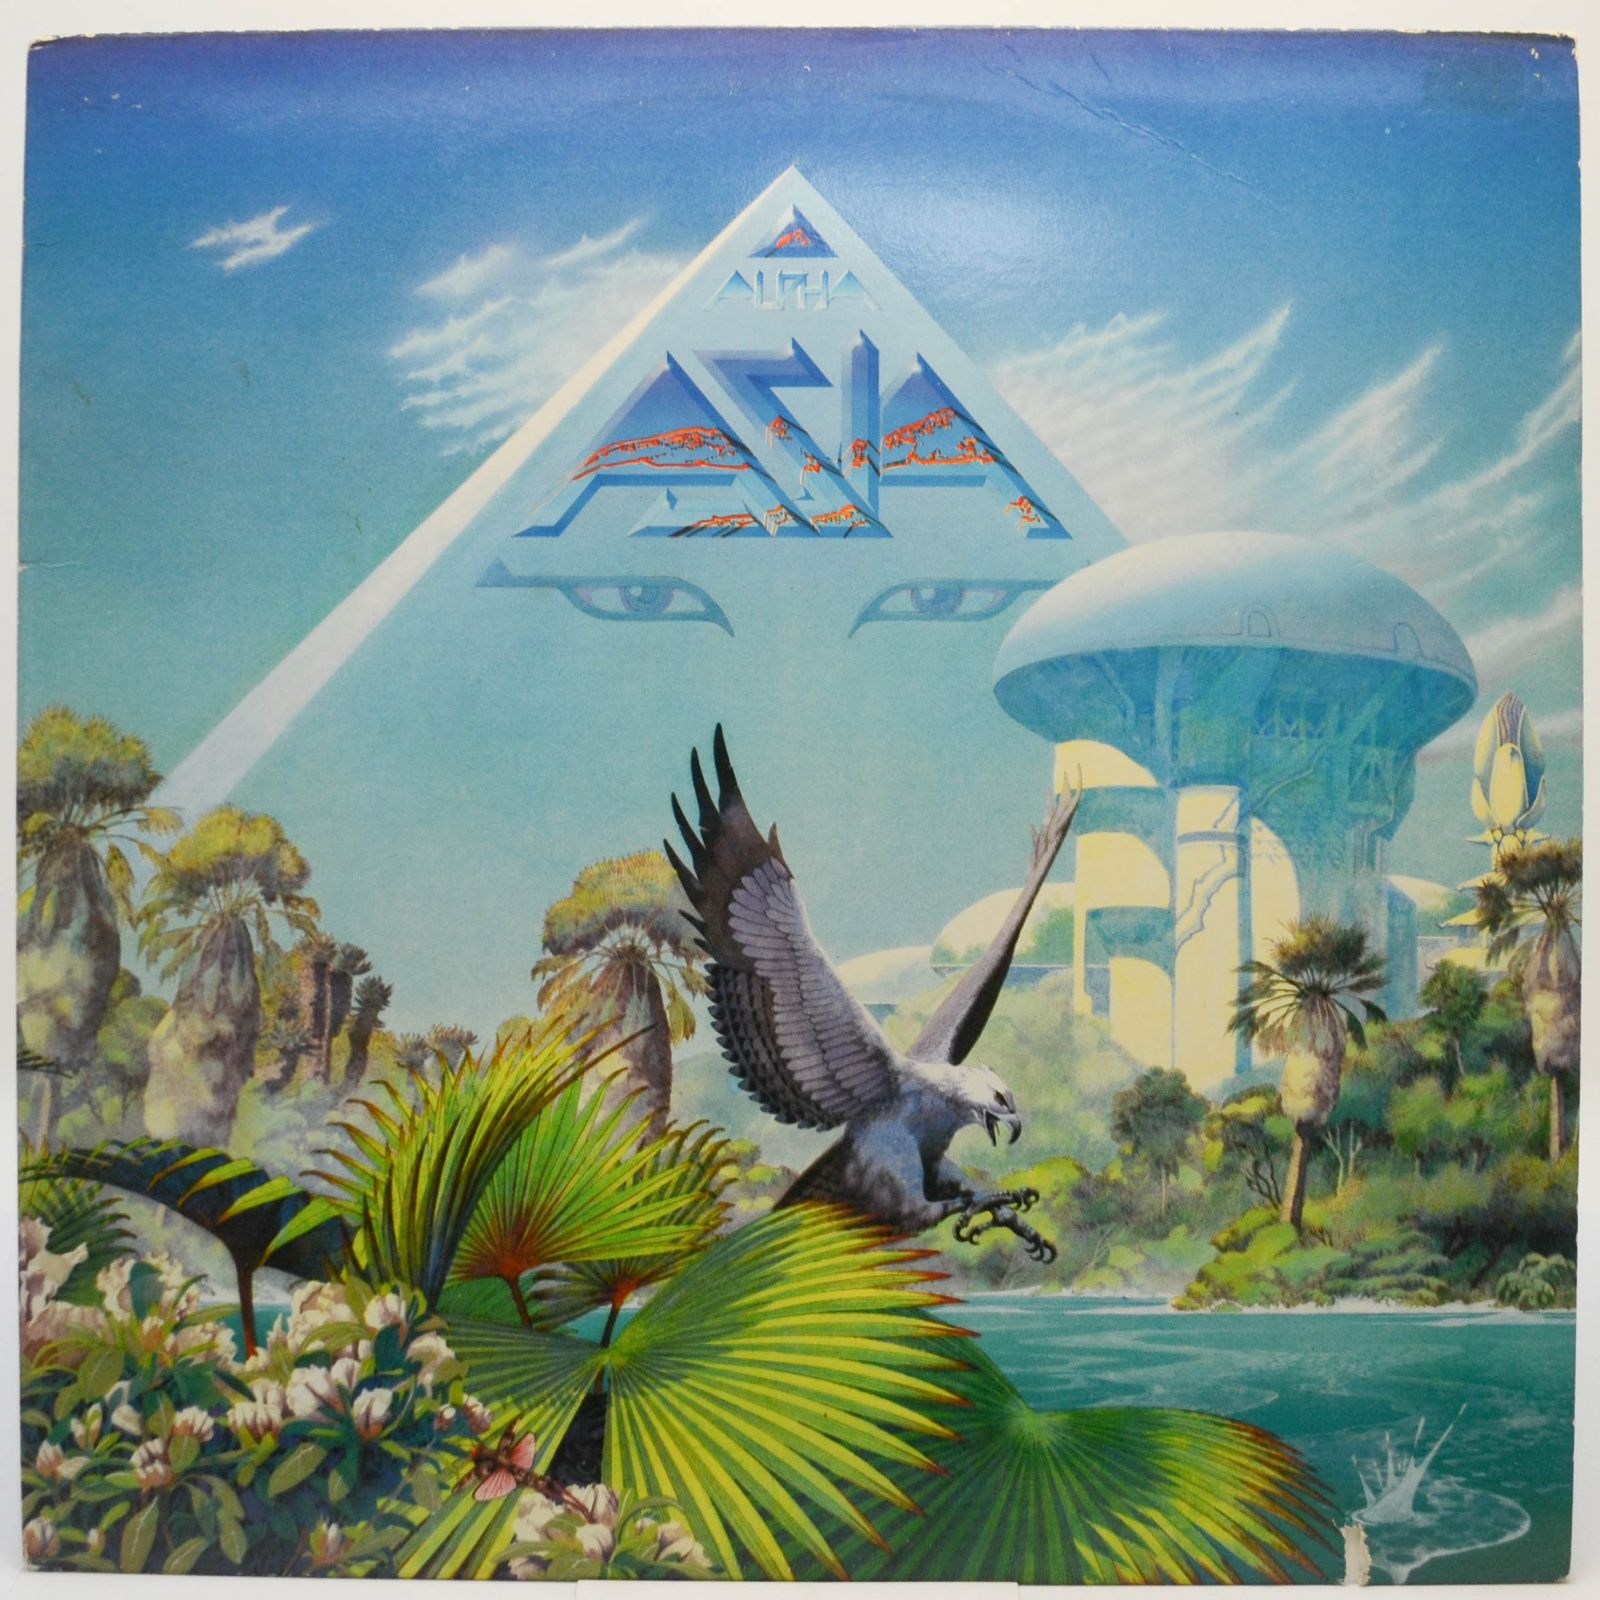 Alpha (USA), 1983